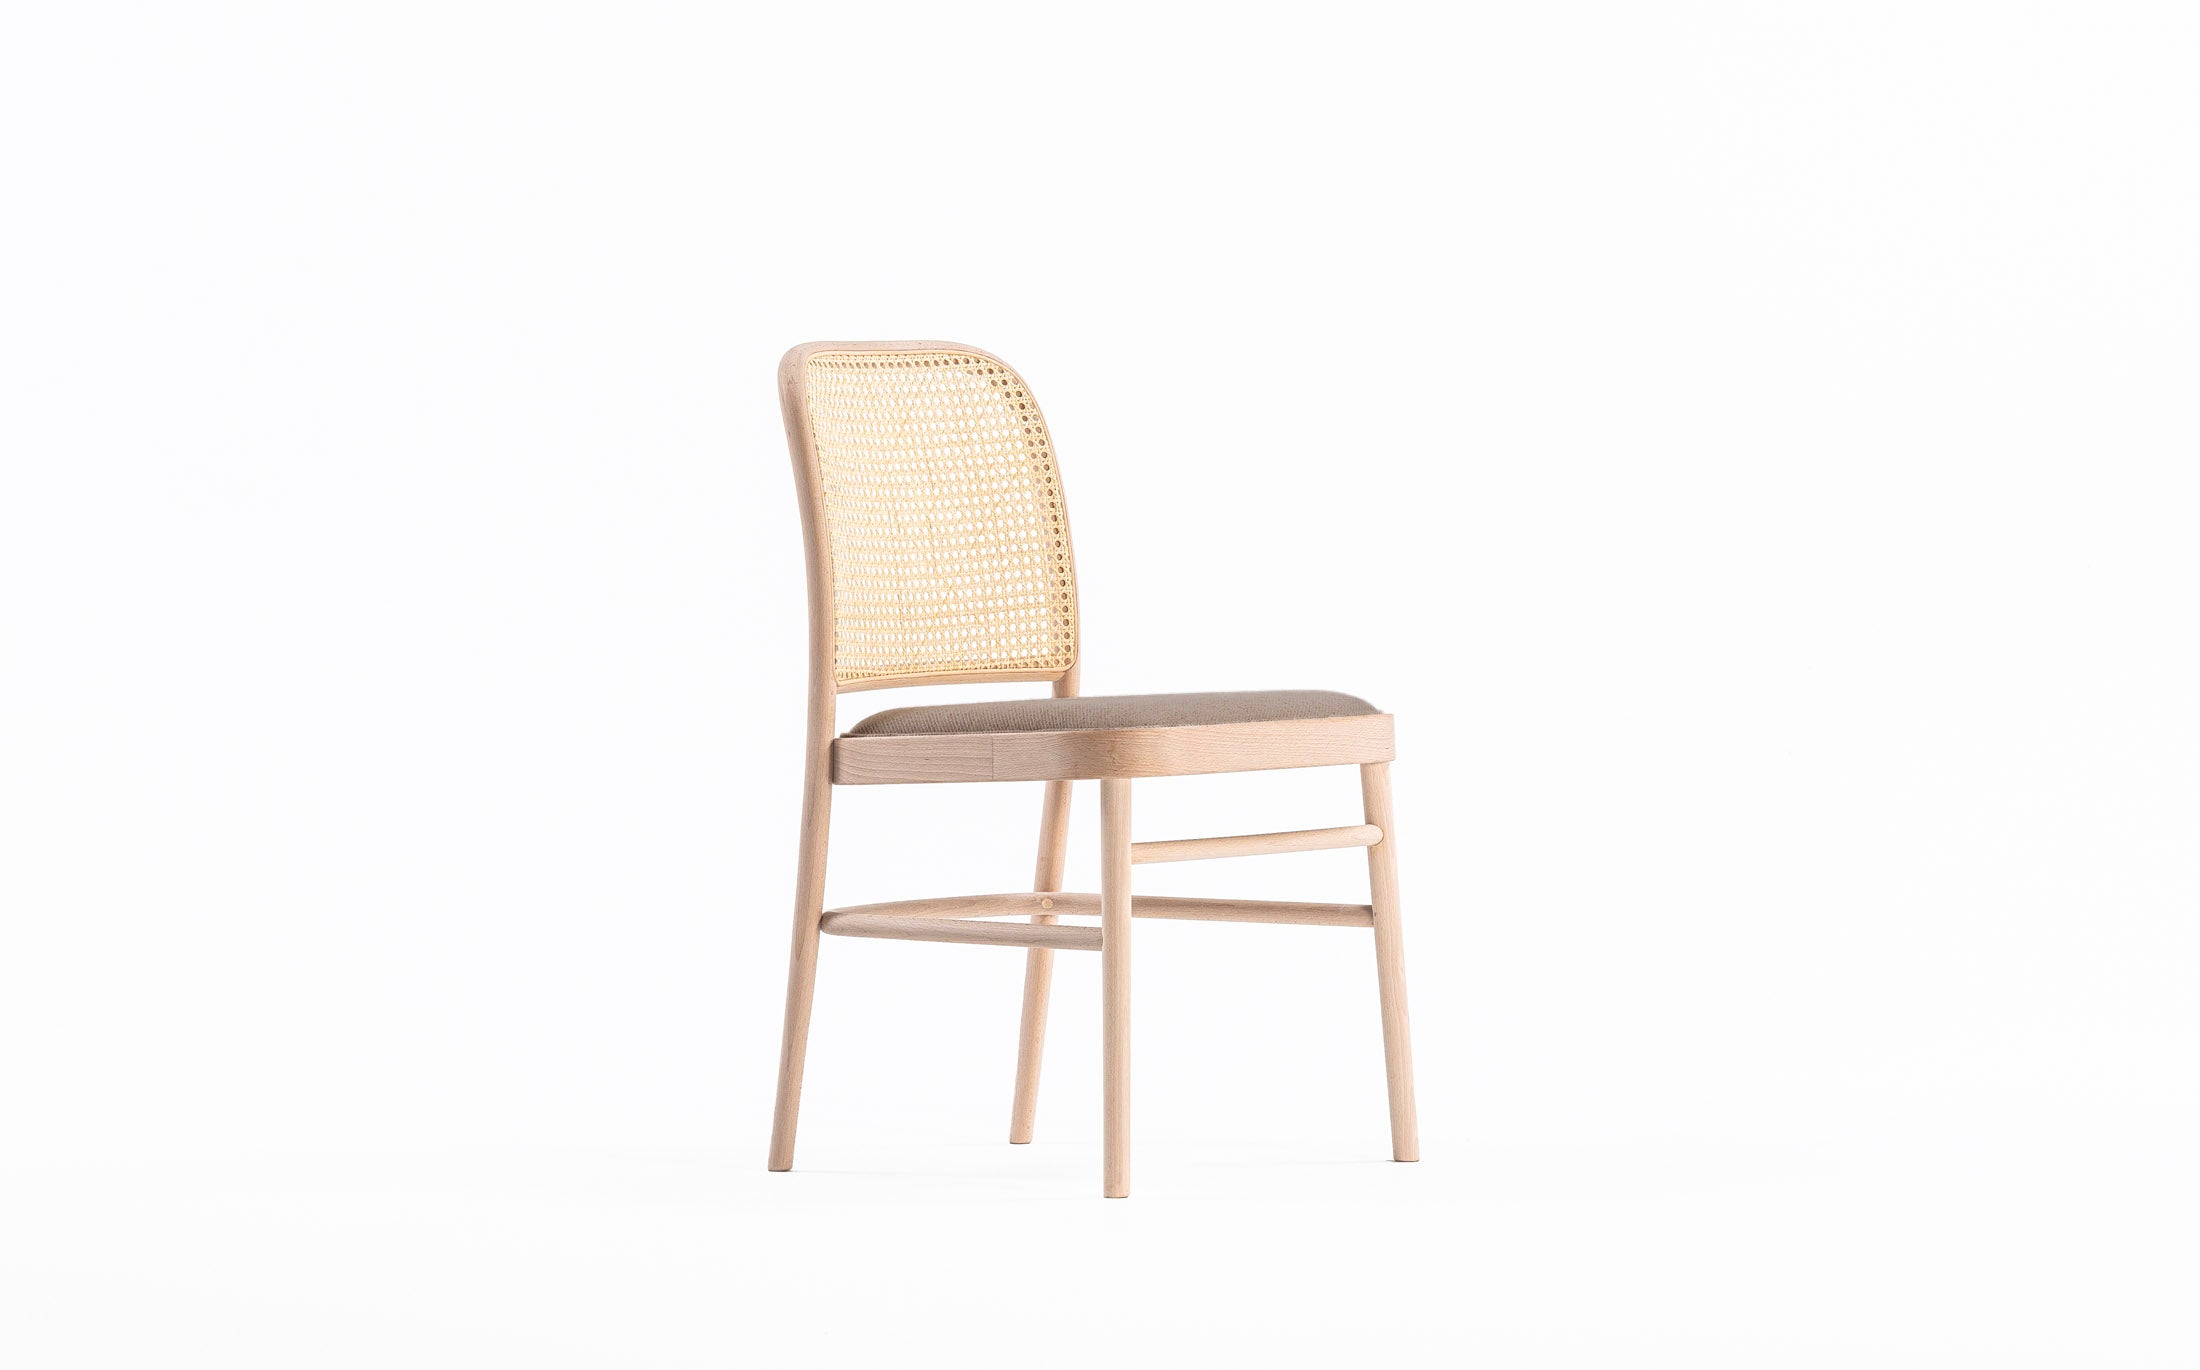 The bent chair #Seat materials_fabric1 bergen 03/07